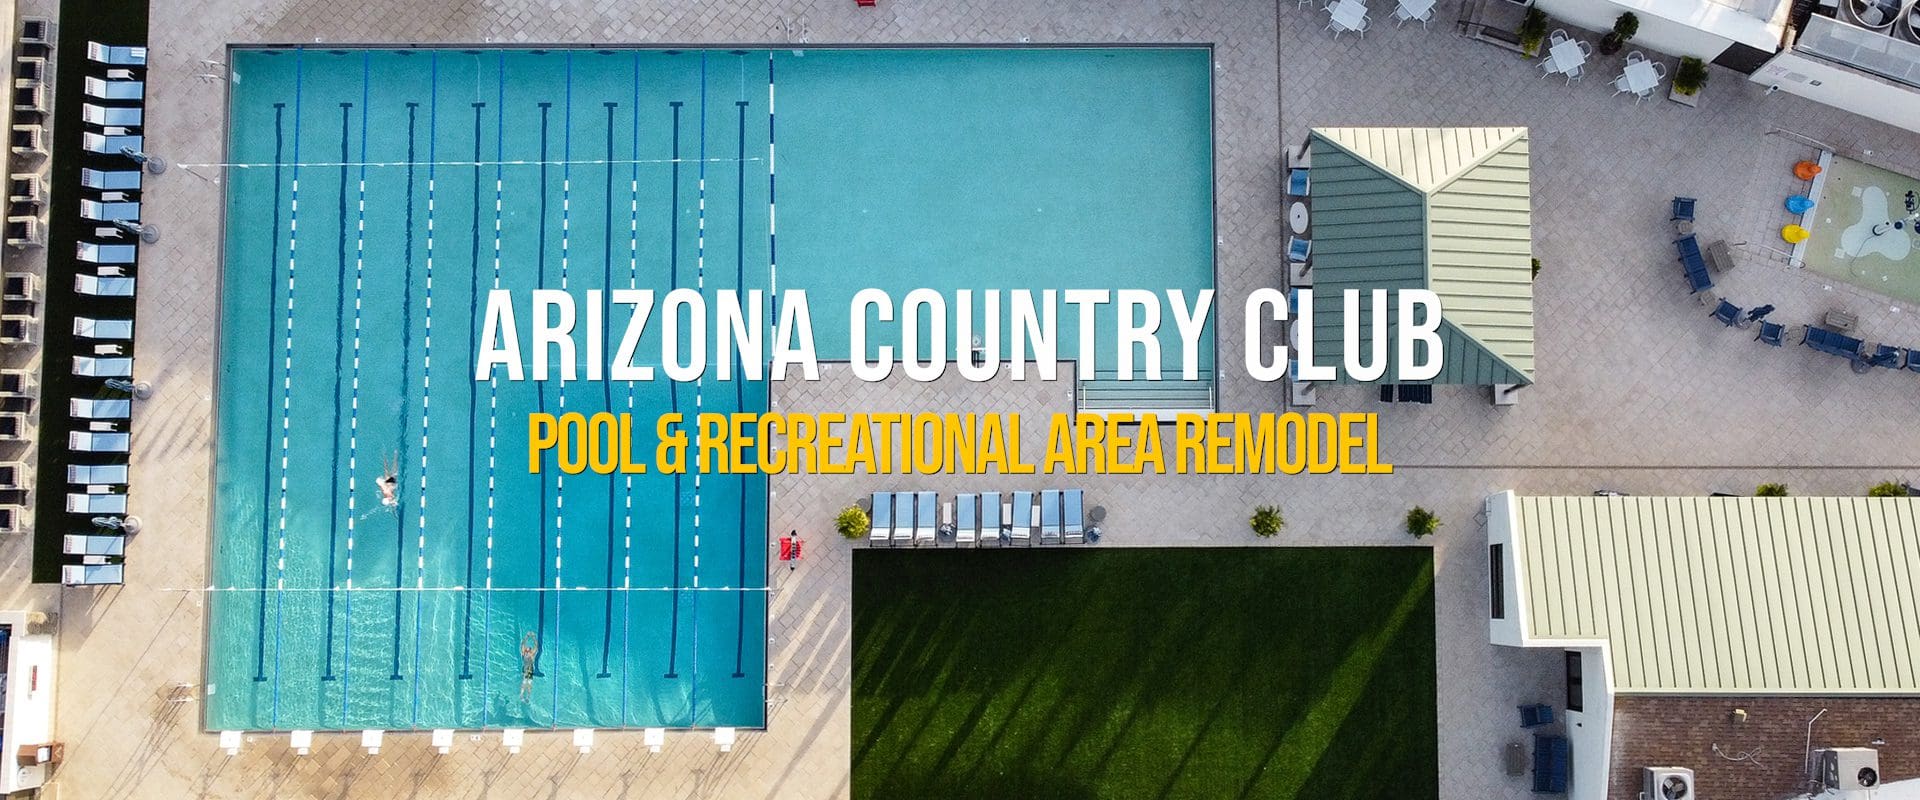 Arizona Country Club Pool & Recreational Area Remodel